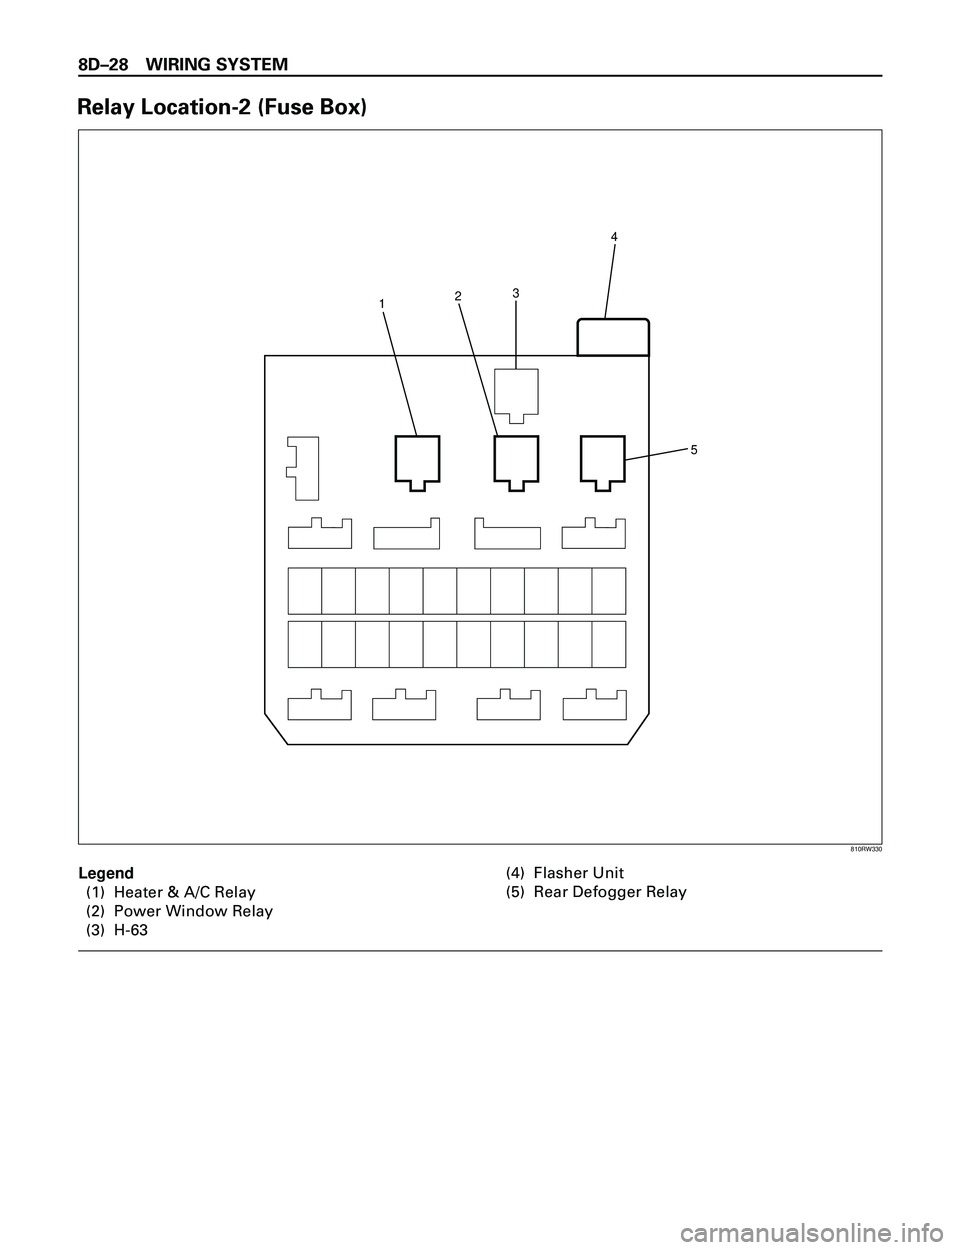 ISUZU TROOPER 1998  Service User Guide 8DÐ28 WIRING SYSTEM
Relay Location-2 (Fuse Box)
1234
5
810RW330
Legend
(1) Heater & A/C Relay
(2) Power Window Relay
(3) H-63(4) Flasher Unit
(5) Rear Defogger Relay 